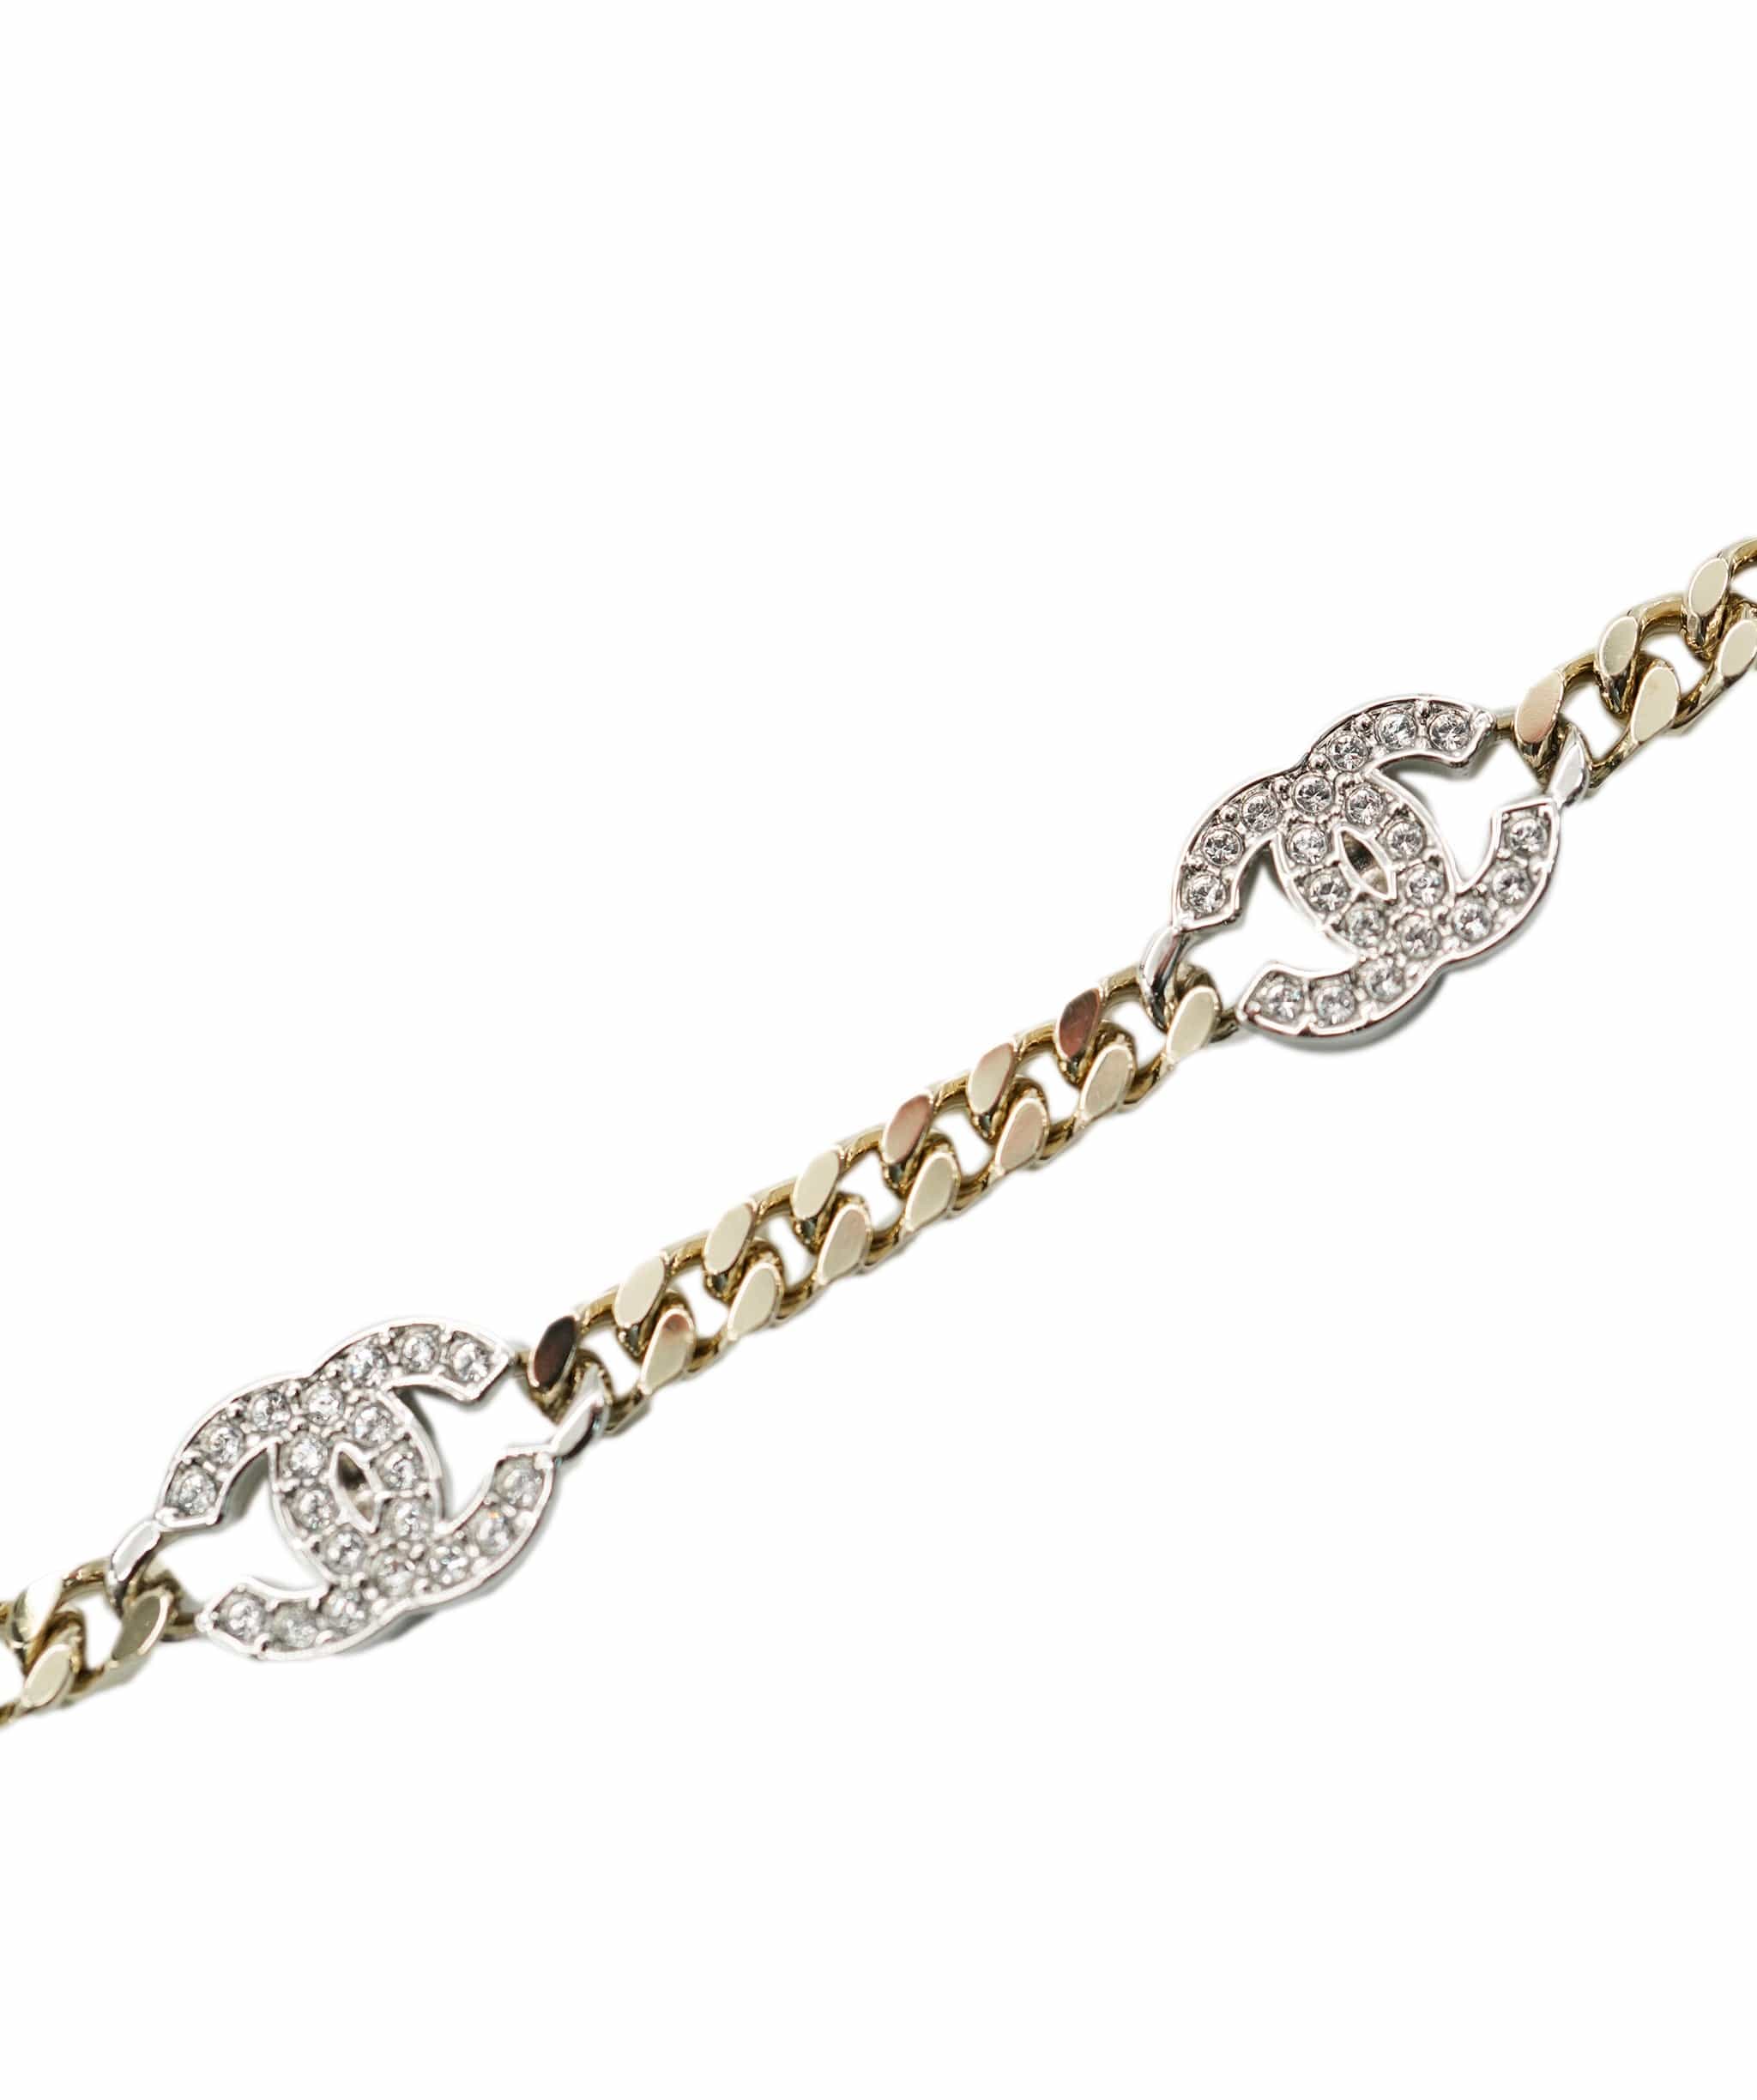 Chanel Chanel champagne gold CC diamante chain belt 96cm - AJC0659